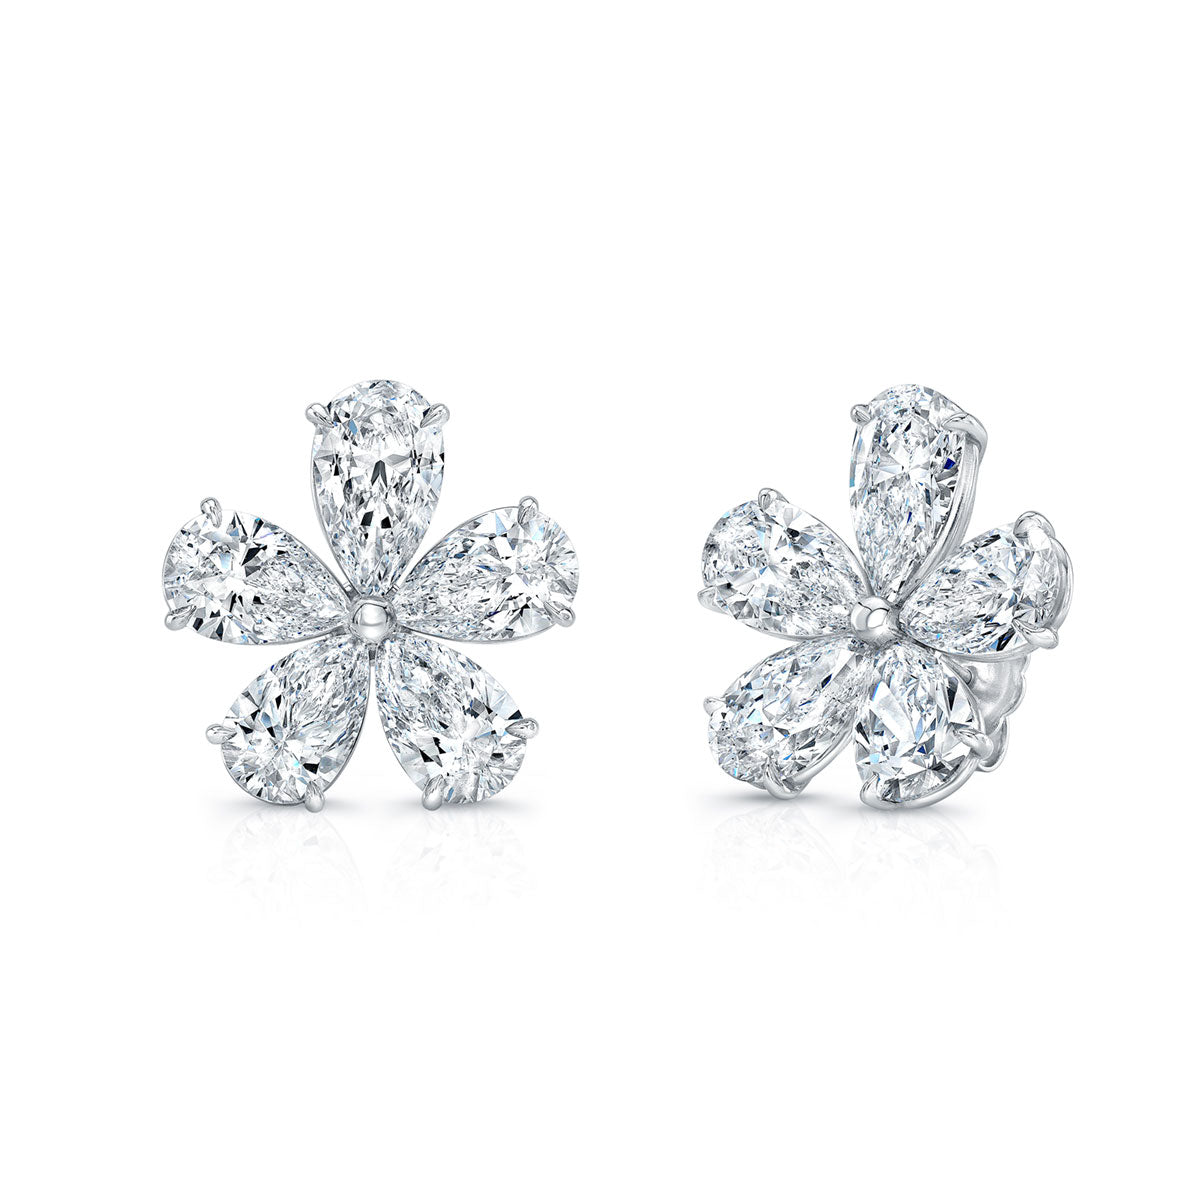 20 Carat Diamond Floret Earrings in 18k in Platinum